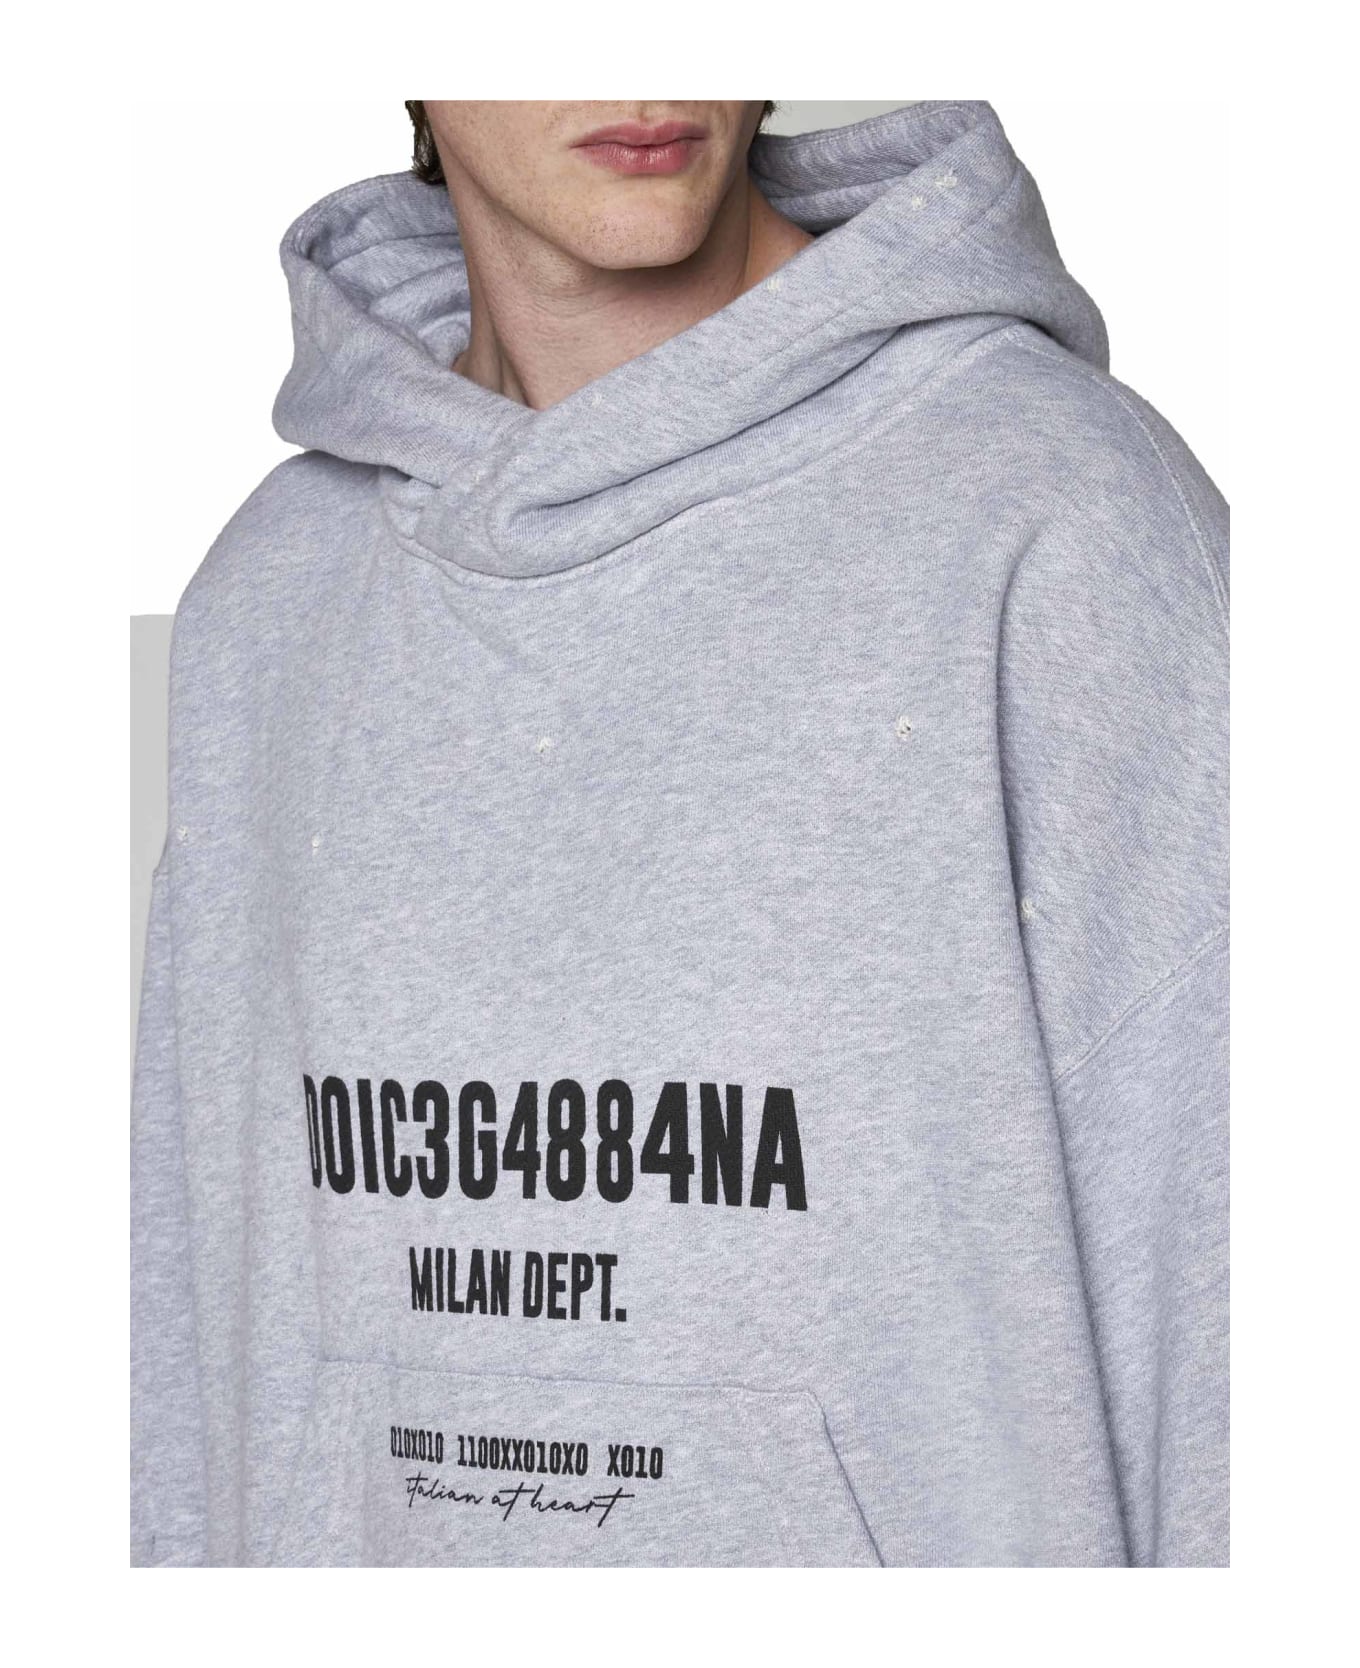 Dolce & Gabbana Fleece - Melange grigio